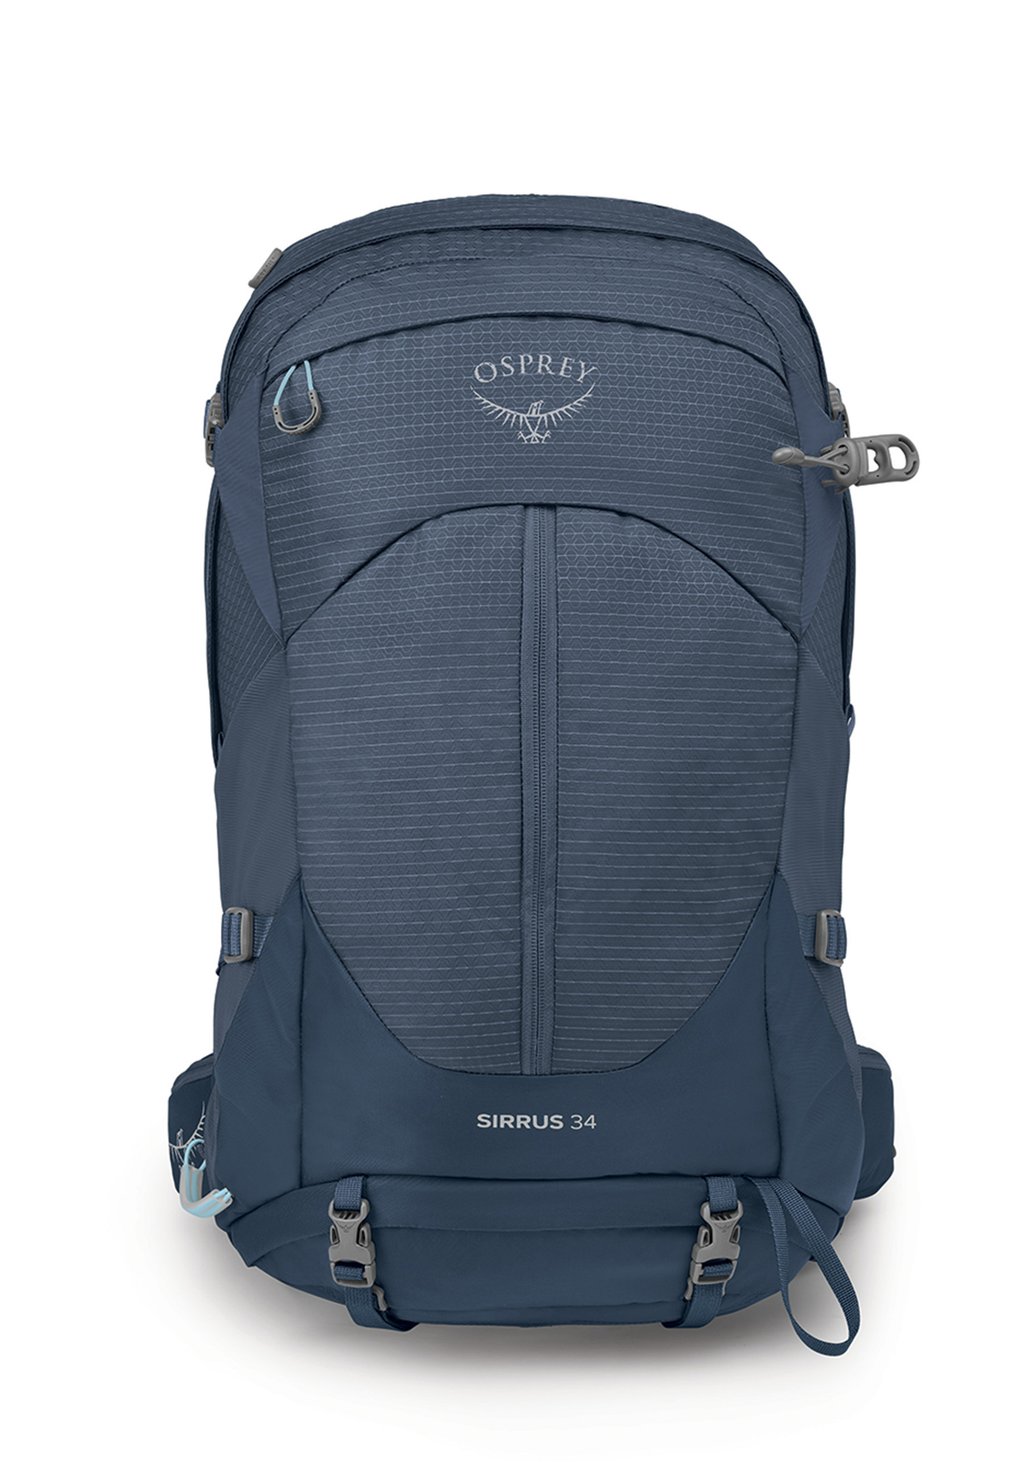 Туристический рюкзак SIRRUS Osprey, цвет muted space blue туристический рюкзак sirrus osprey цвет tunnel vision grey